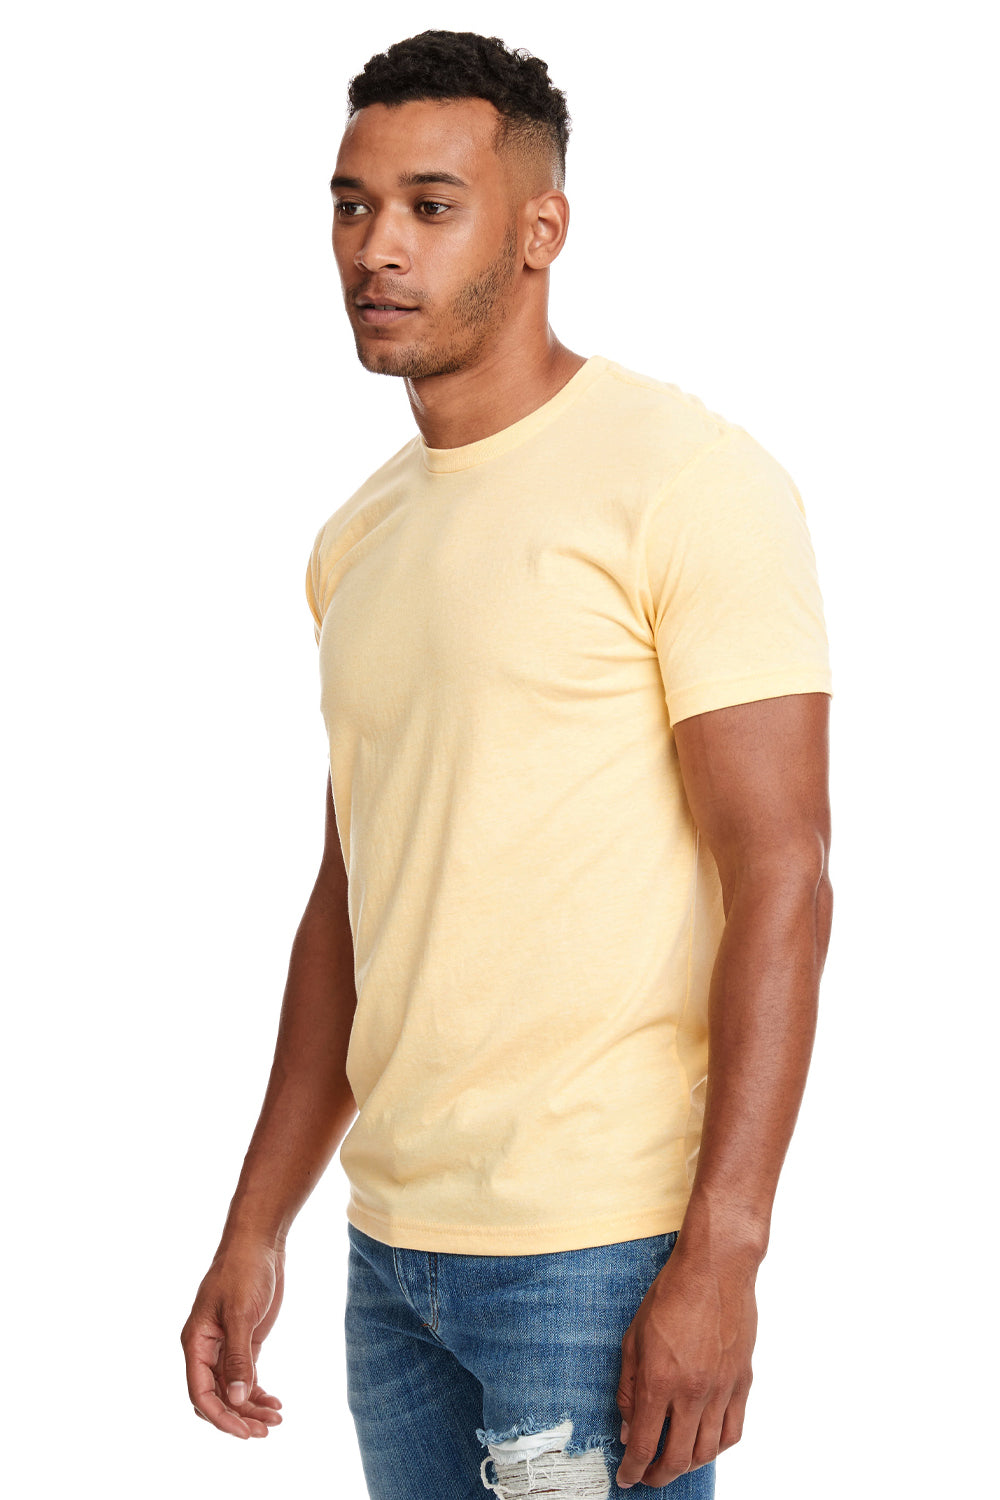 Next Level N6210 Mens CVC Jersey Short Sleeve Crewneck T-Shirt Yellow Side